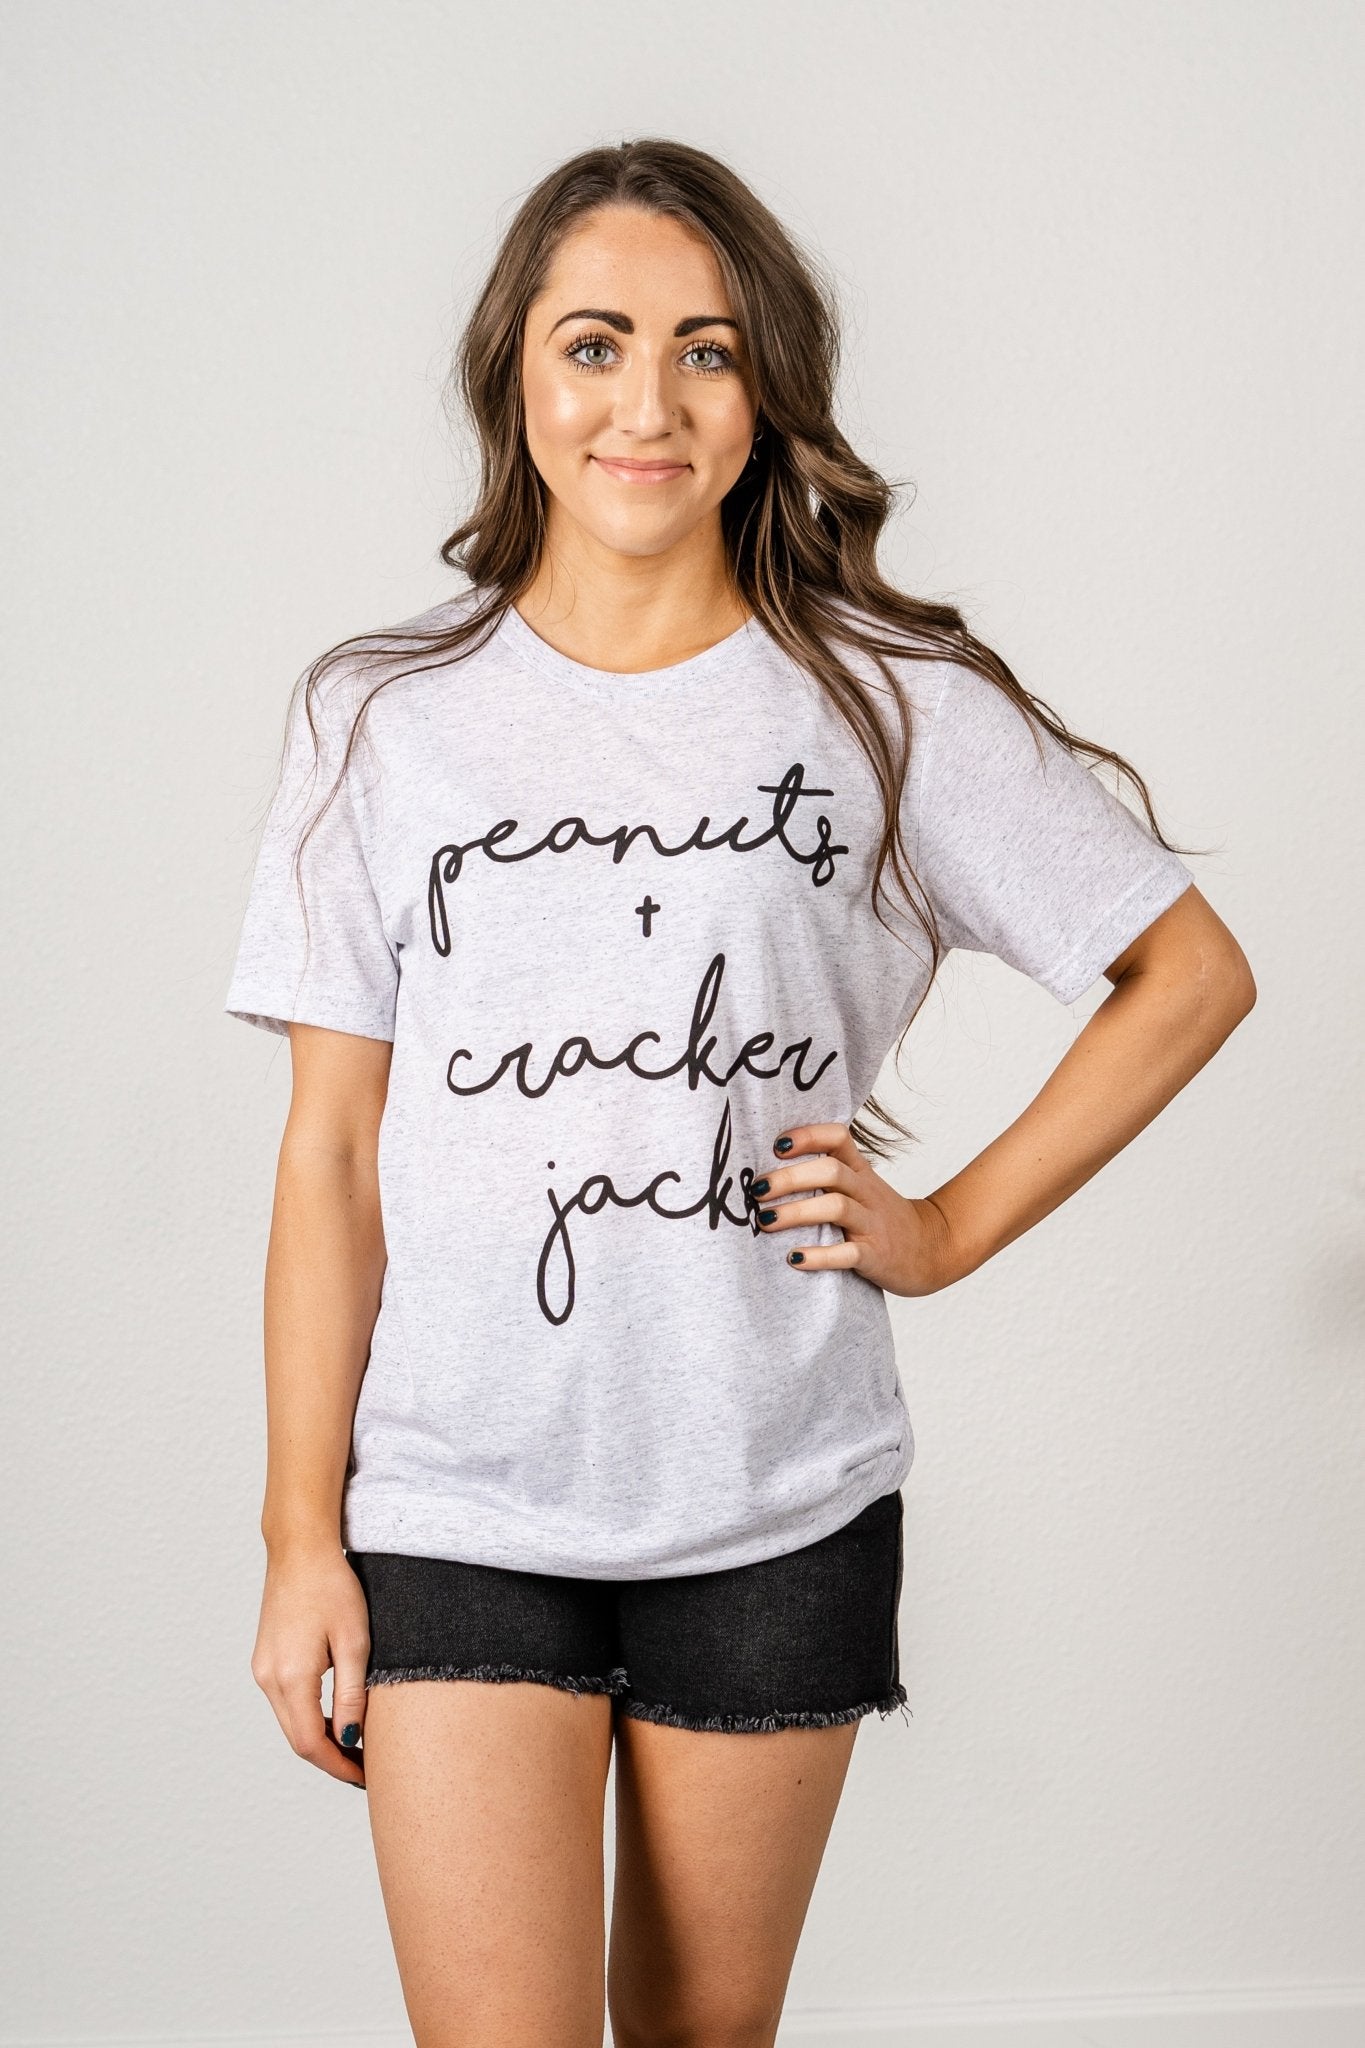 Peanuts + Cracker Jacks unisex short sleeve t-shirt white fleck - Stylish T-shirts - Trendy Graphic T-Shirts and Tank Tops at Lush Fashion Lounge Boutique in Oklahoma City